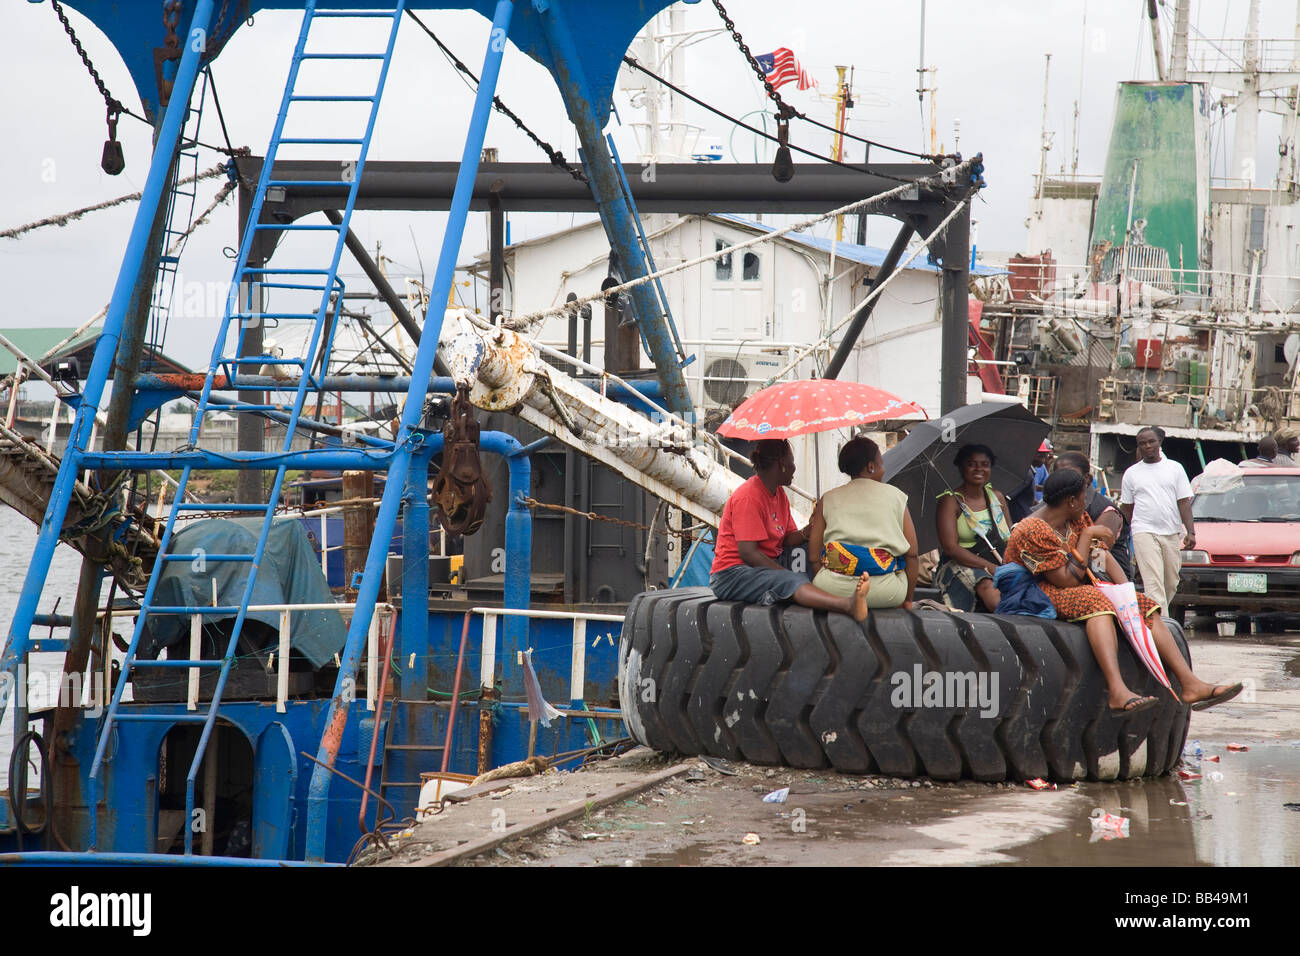 Commercial fishing dock in Monrovia in Liberia. Stock Photo